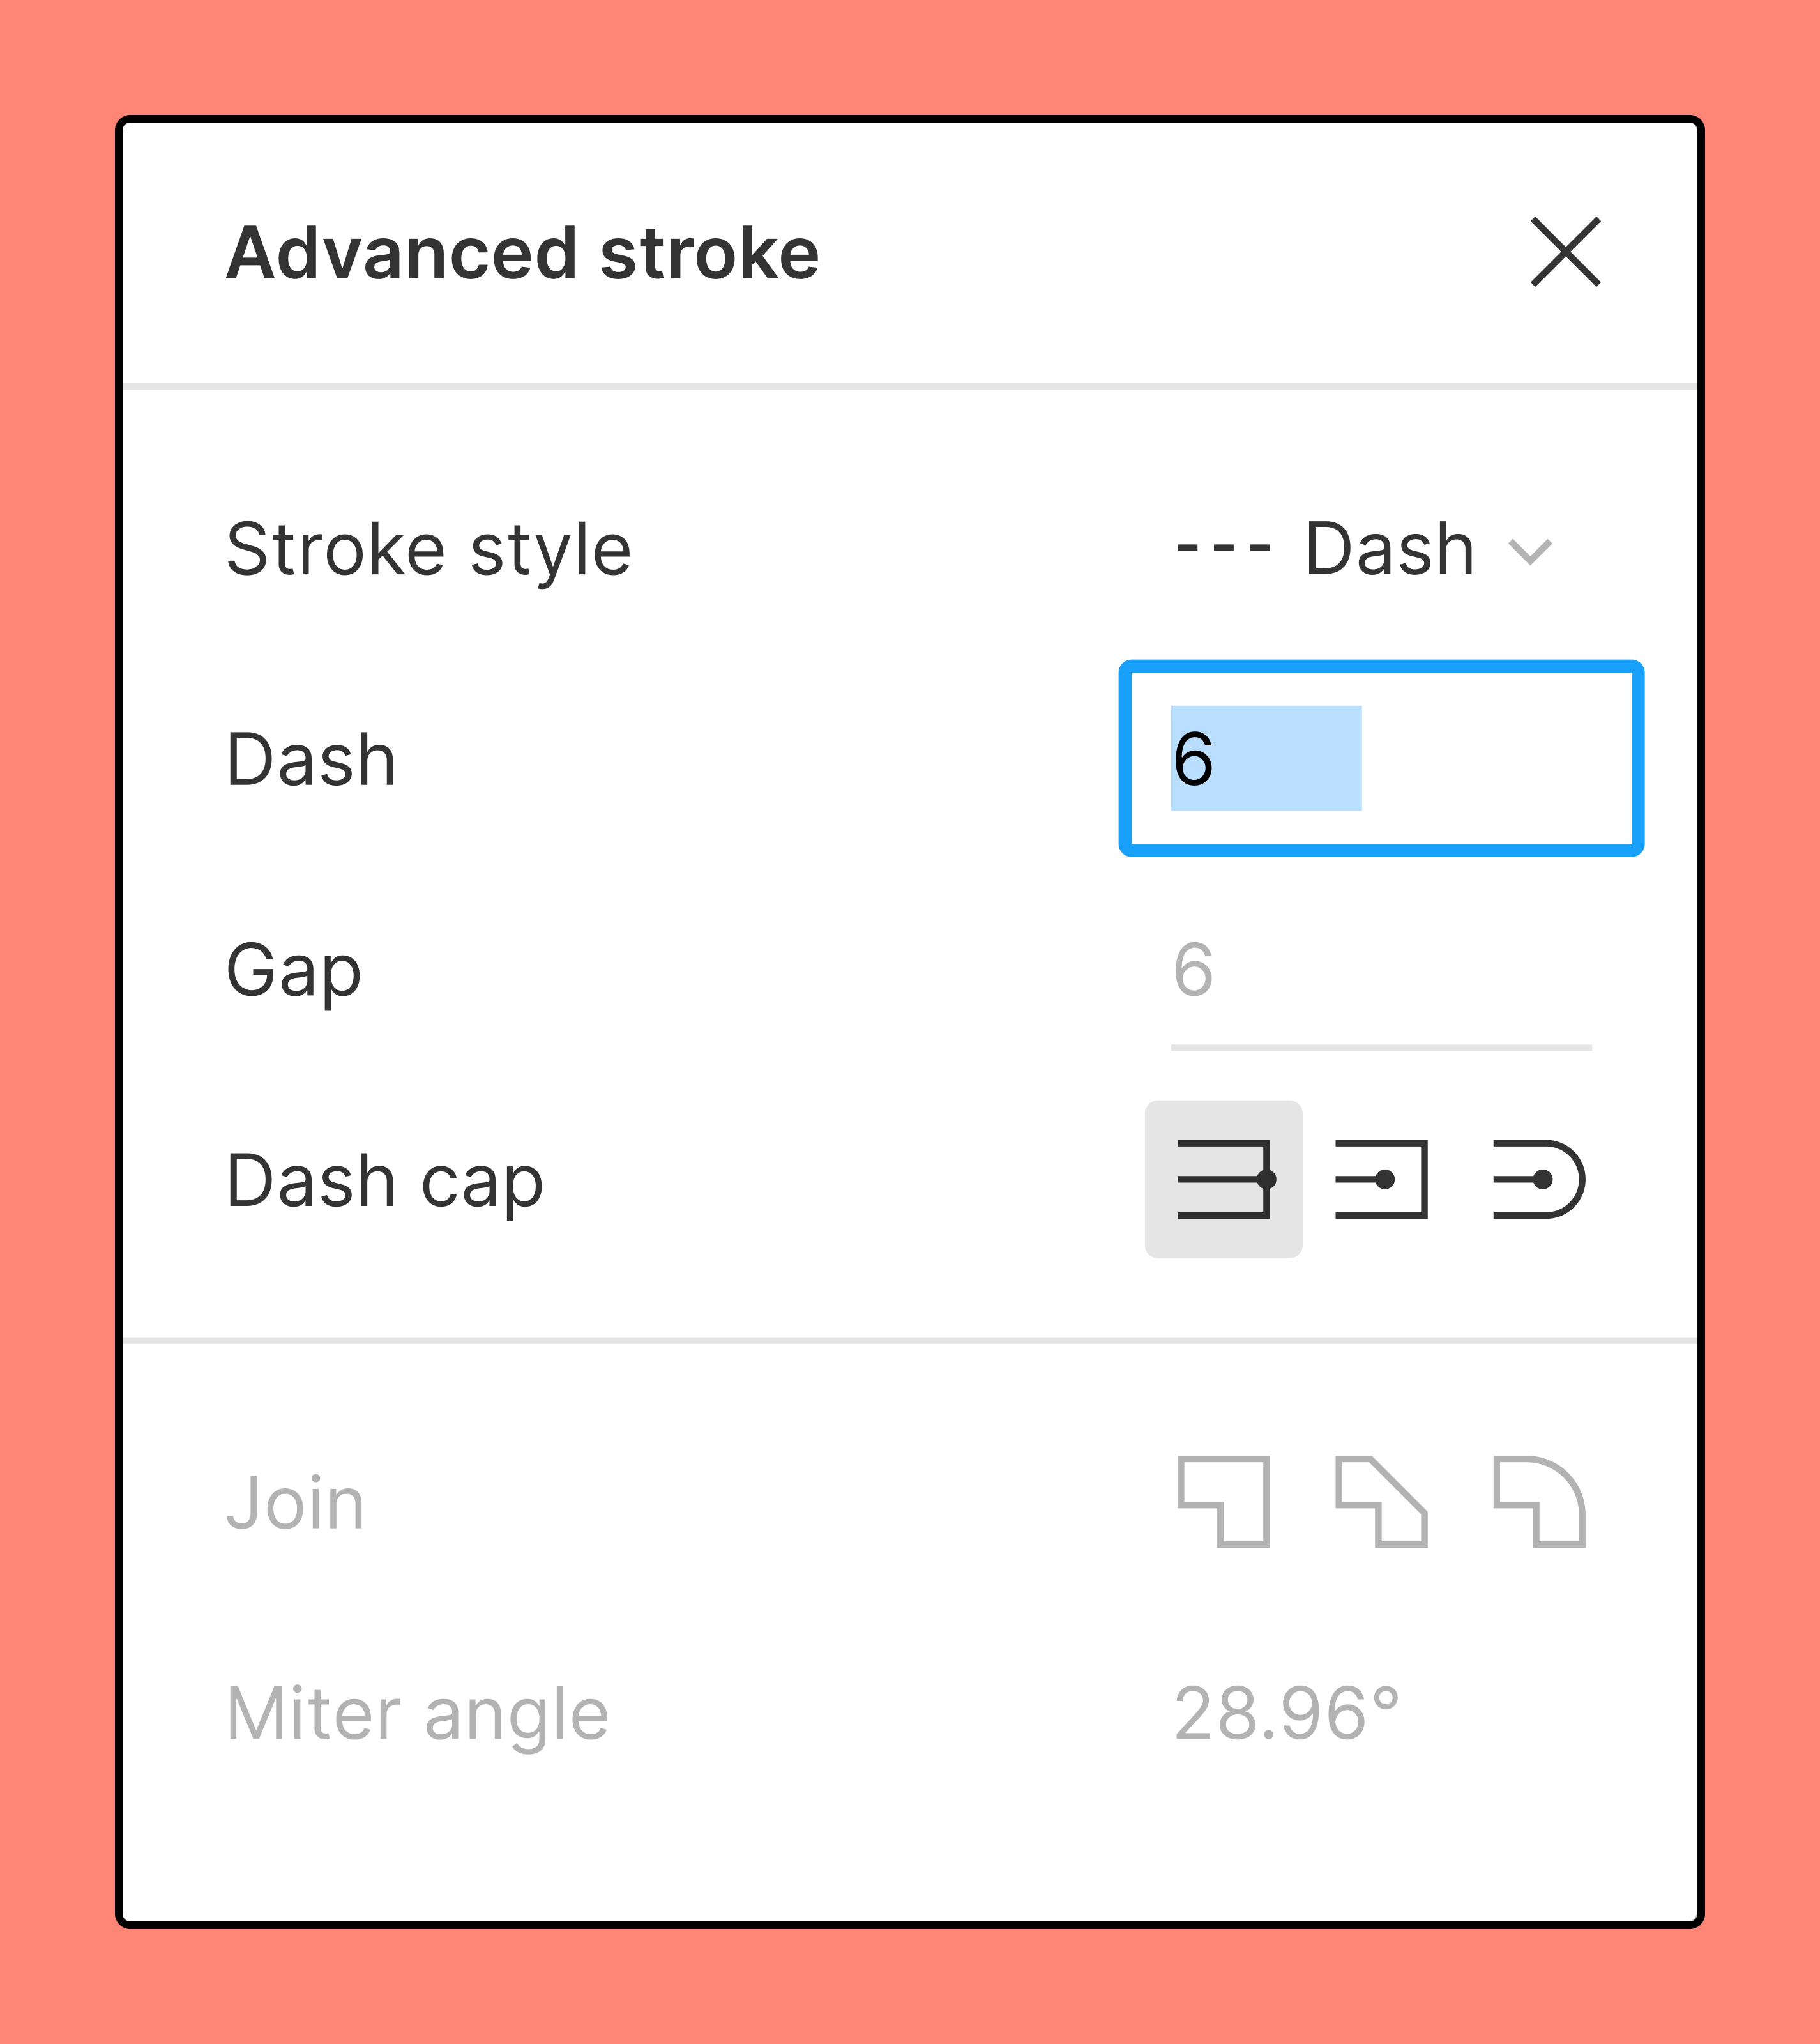 Dash stroke settings in advanced stroke menu